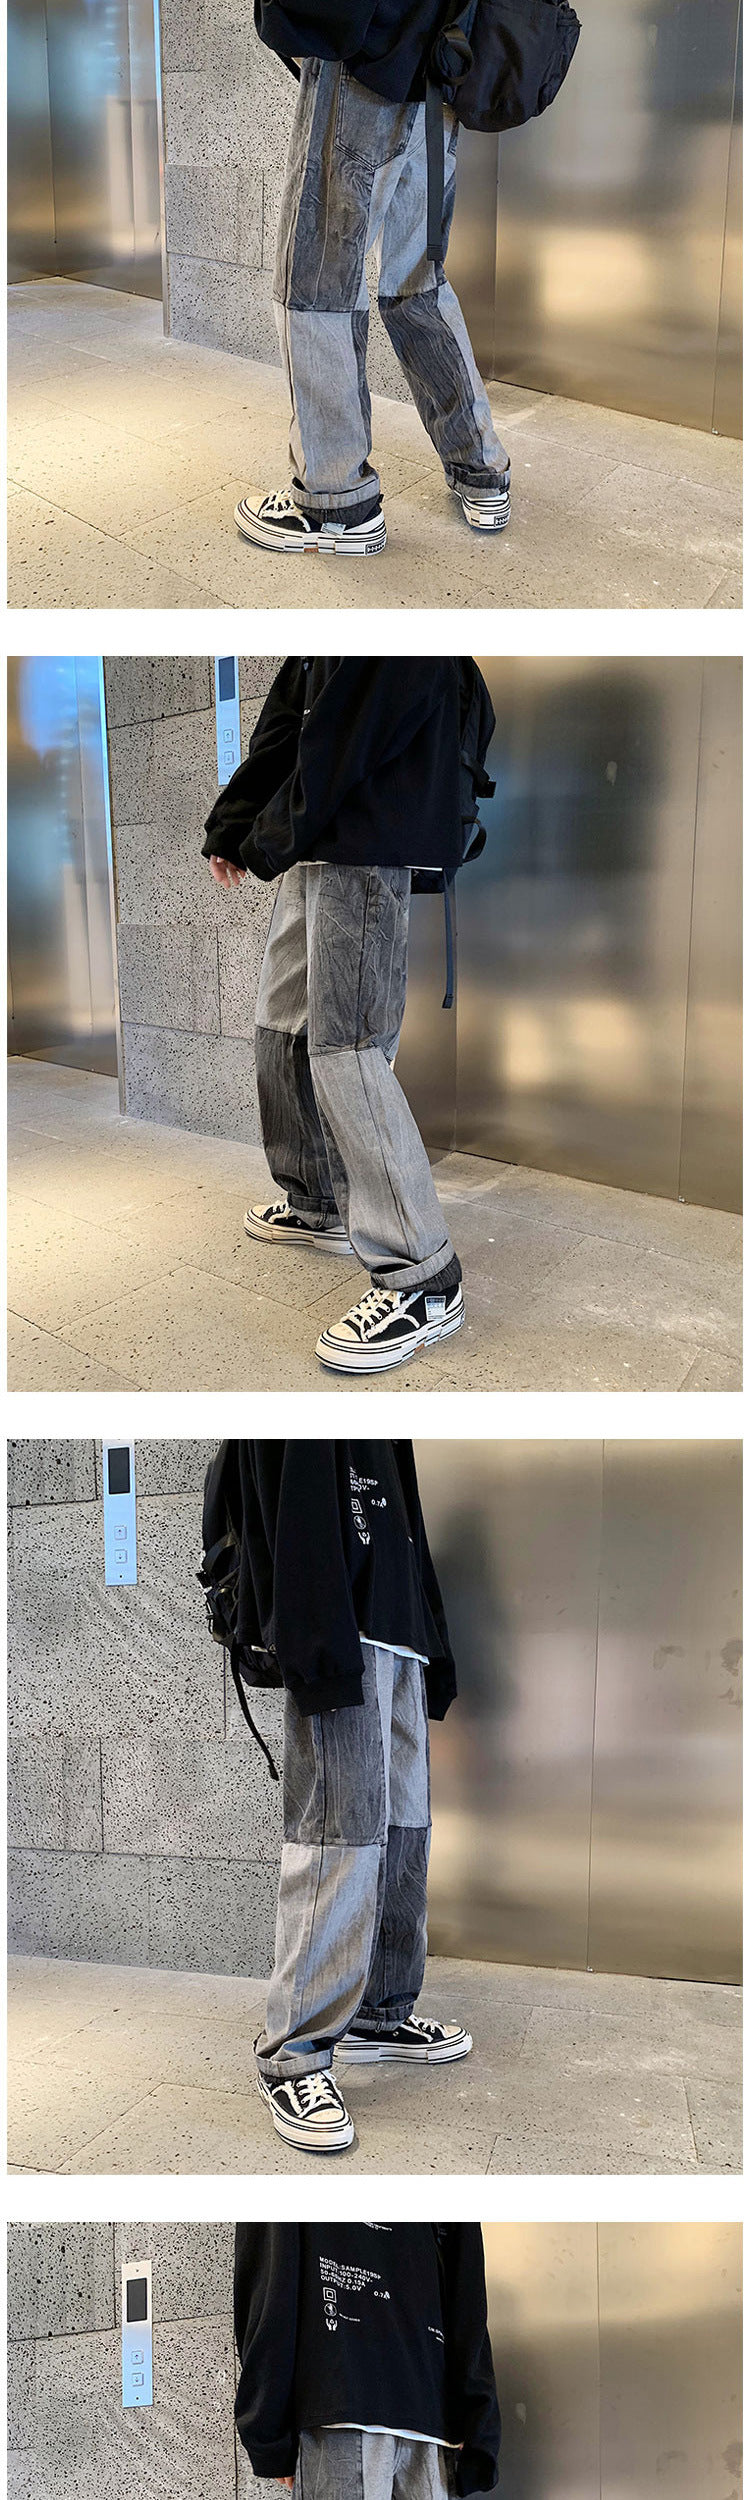 Voguable Korean Style Fashion Men's Denim Wide-leg Pants 2021 New Autumn Loose Straight-leg Jeans Paneled Denim Trousers Male voguable